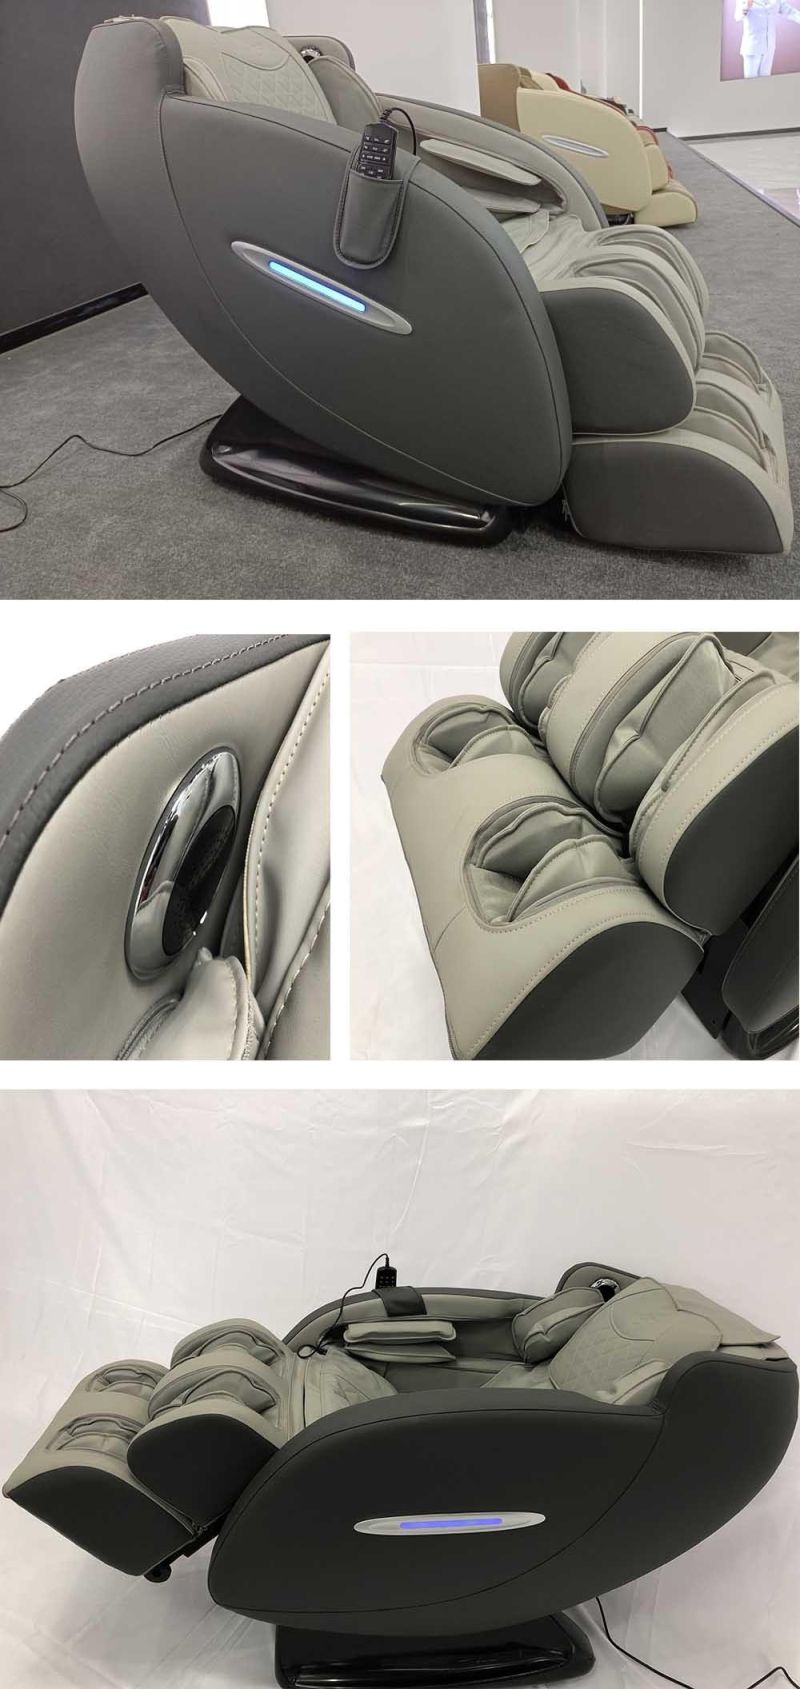 electric Massage Chair Full Body Modern Design with Zero Gravity